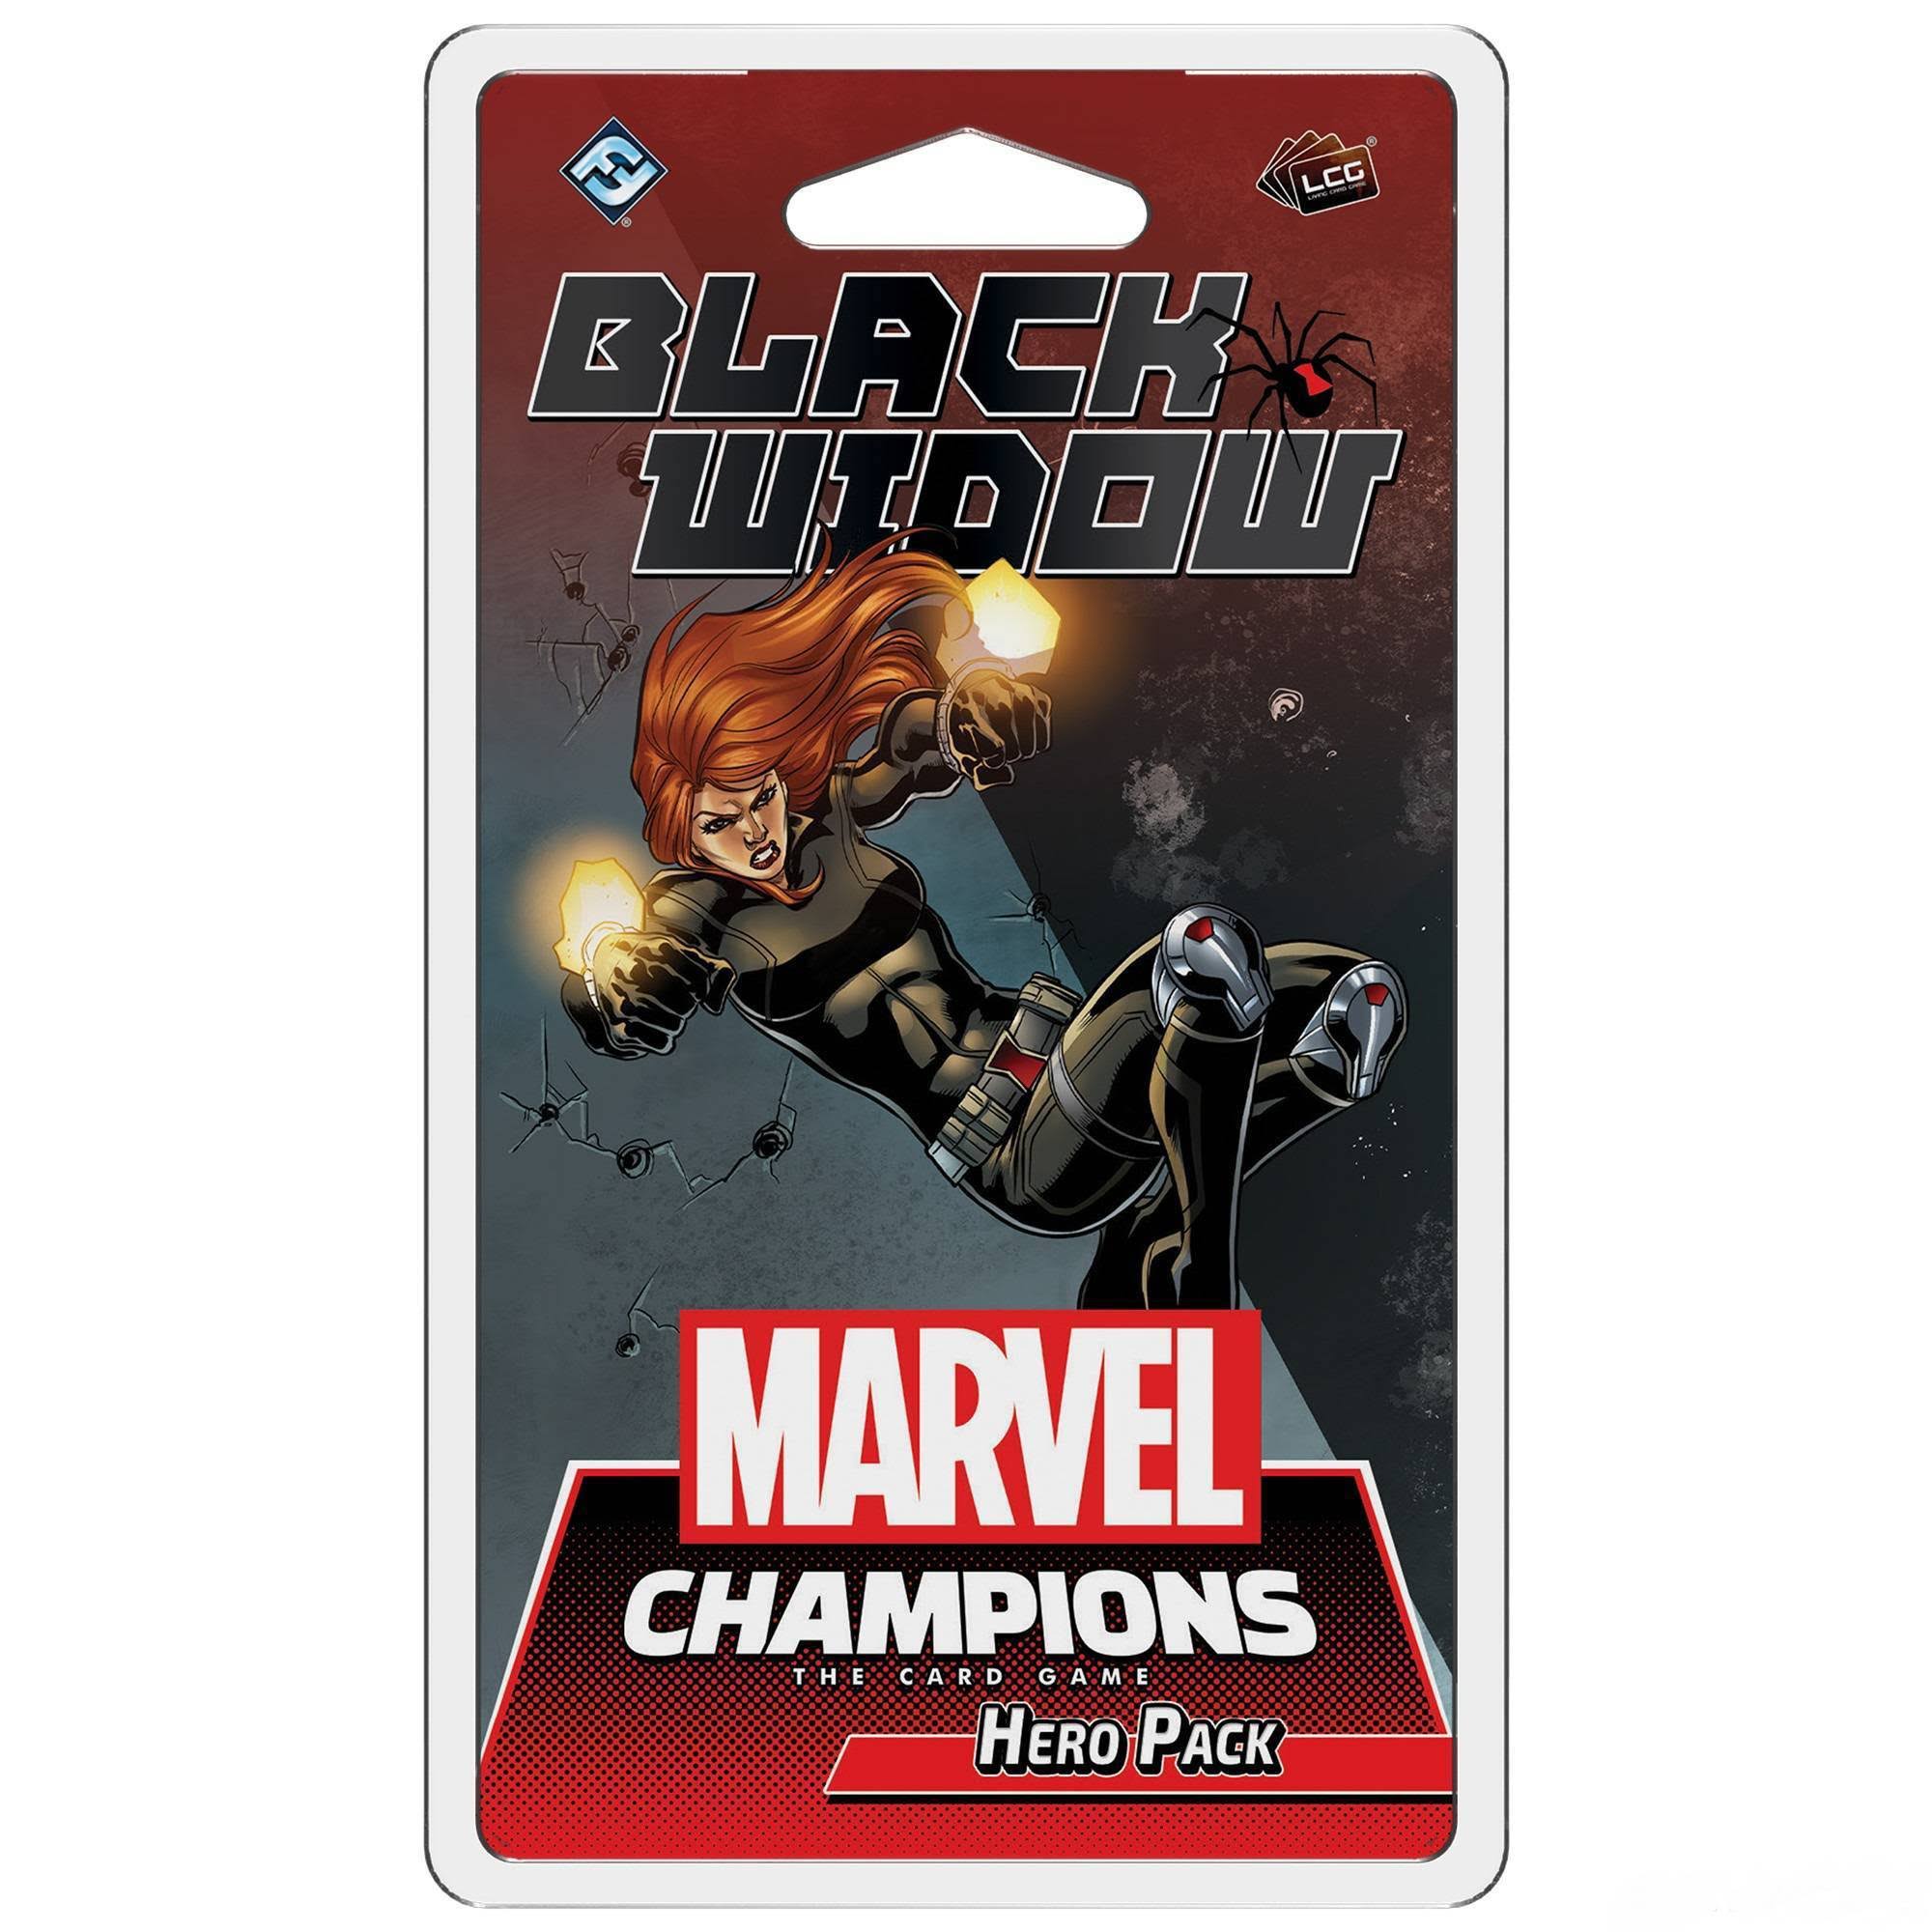 Black WIDOW HERO PACK - Marvel CHAMPIONS CARD GAME